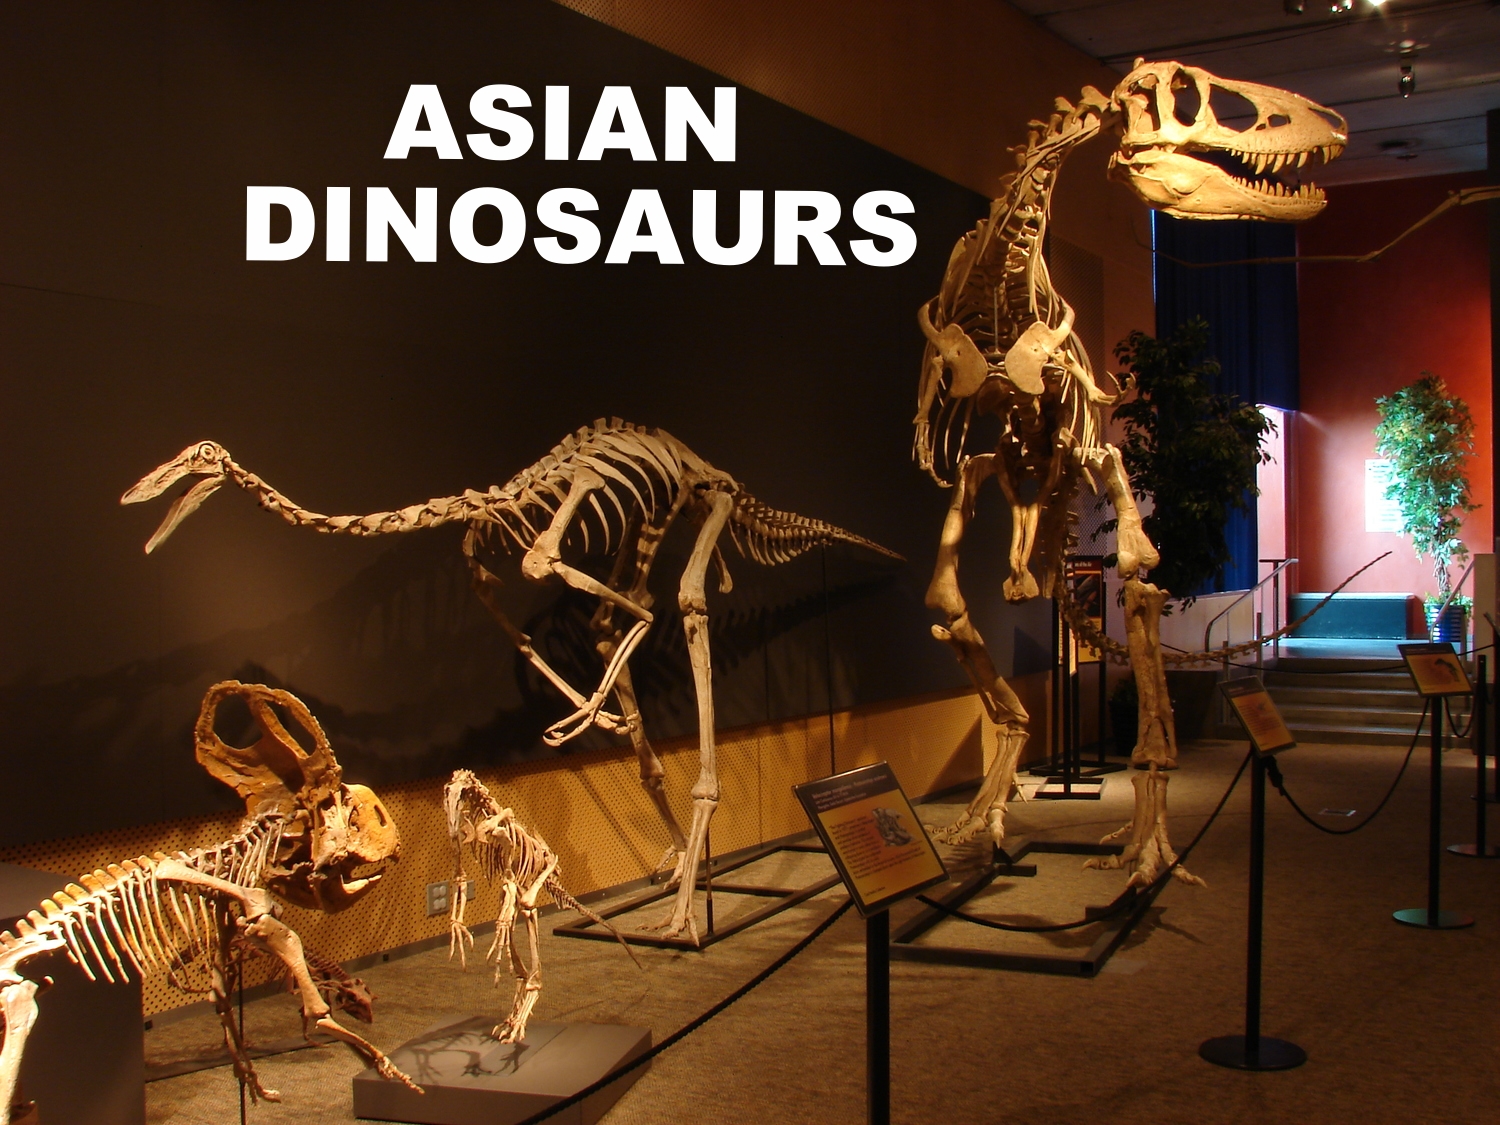 Cretaceous Dinosaurs of Asia